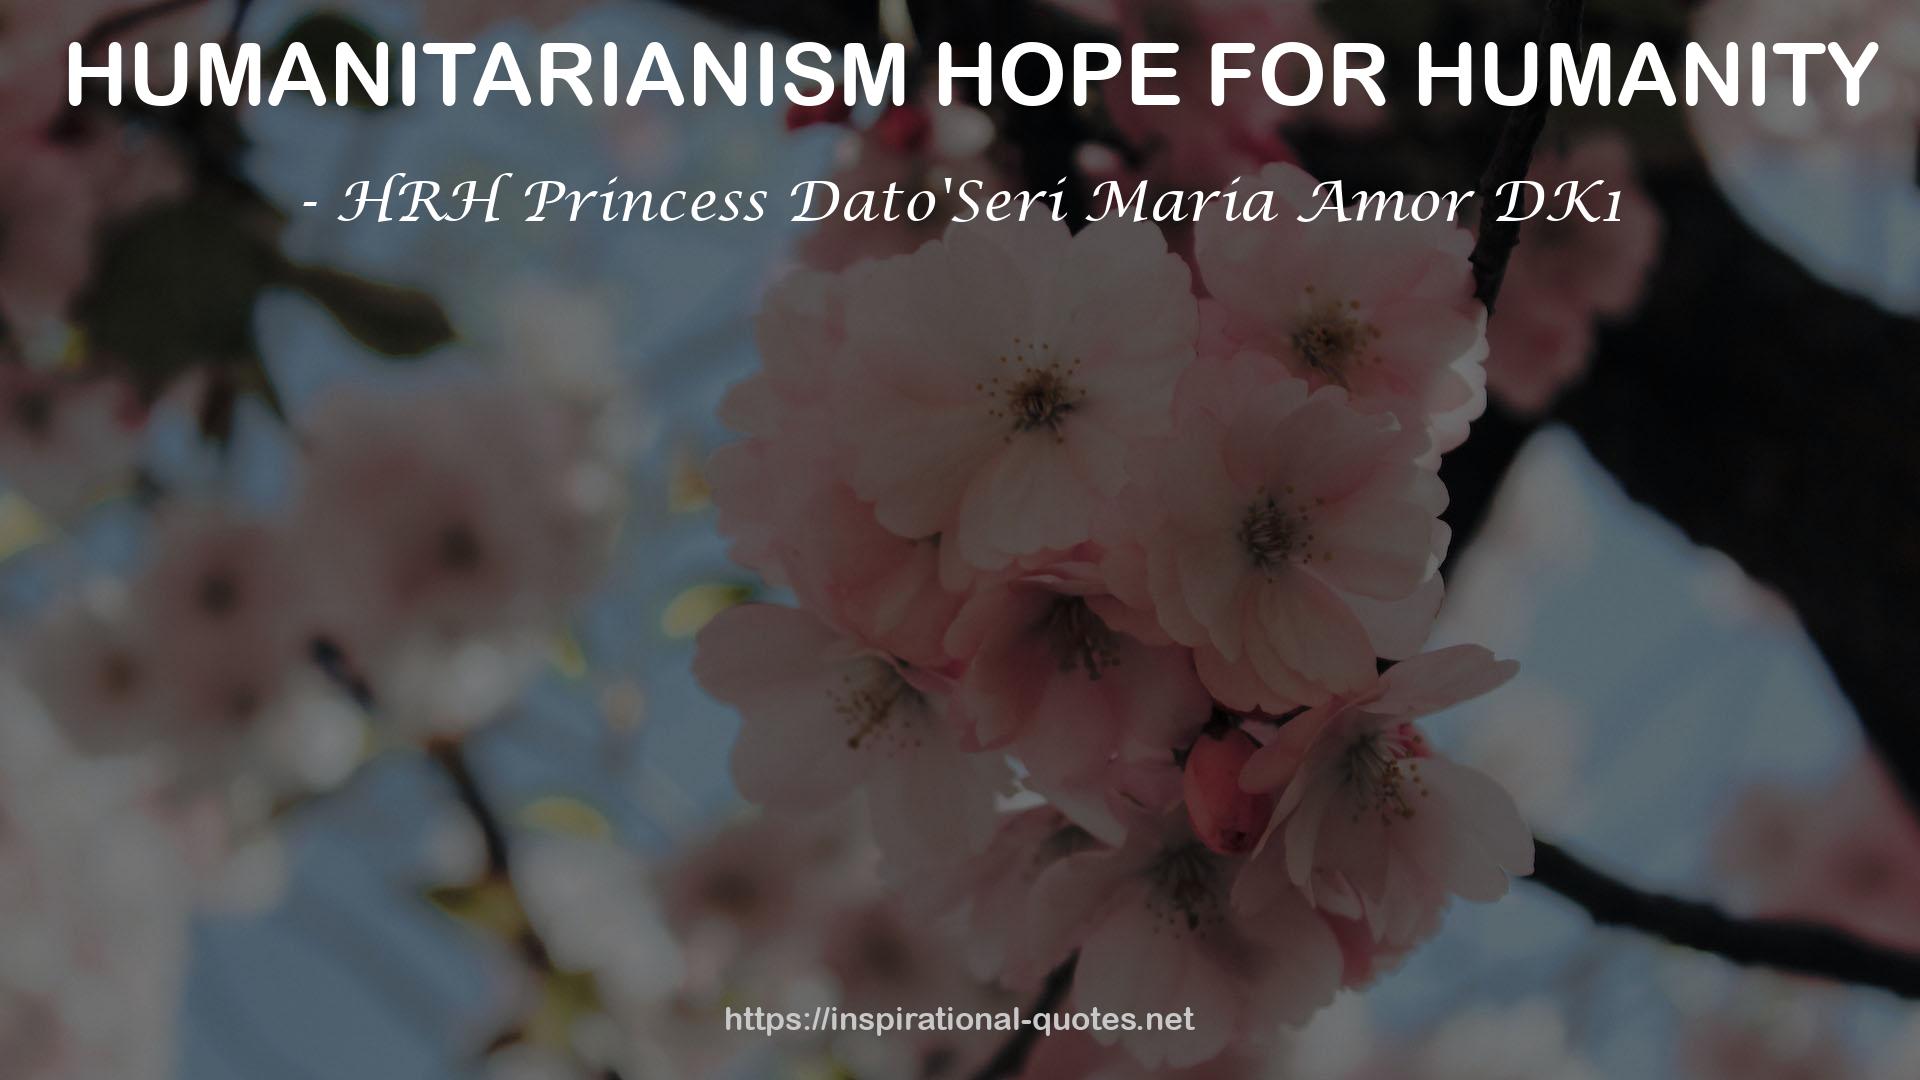 HRH Princess Dato'Seri Maria Amor DK1 QUOTES